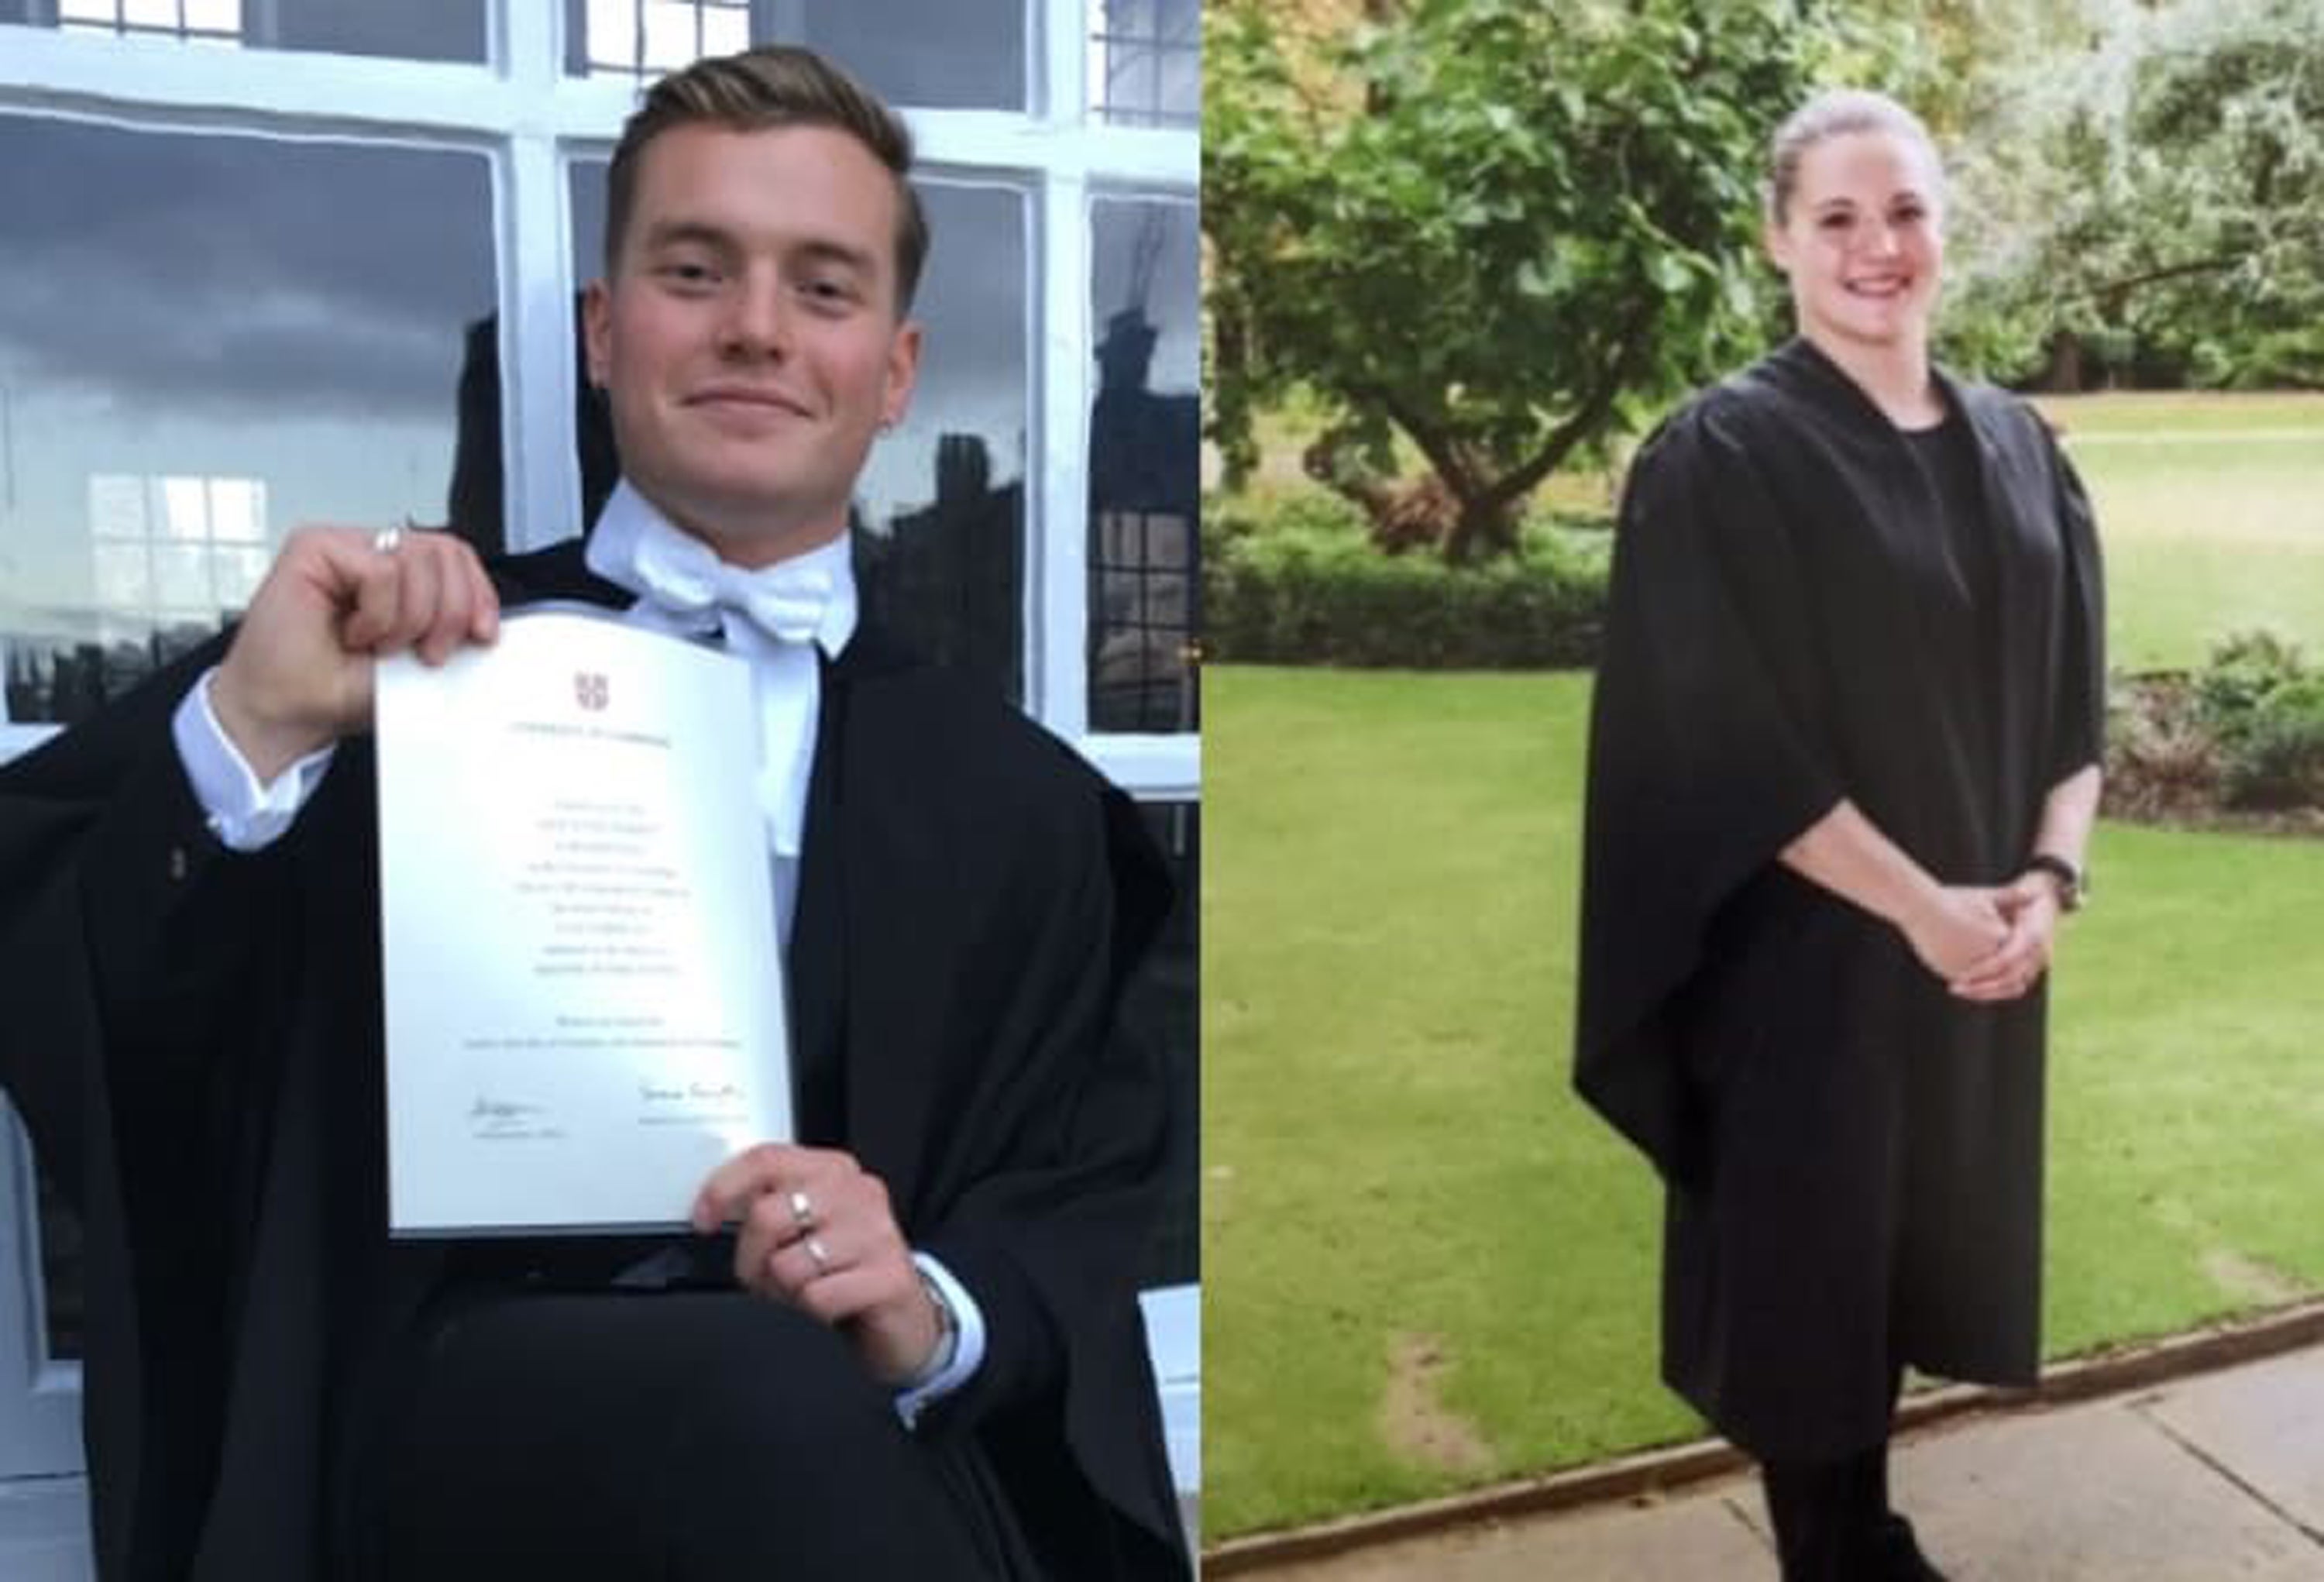 Cambridge graduates Jack Merritt, 25, and Saskia Jones, 23, who were stabbed to death by terrorist Usman Khan during a prisoner rehabilitation event at the Fishmongers’ Hall in London